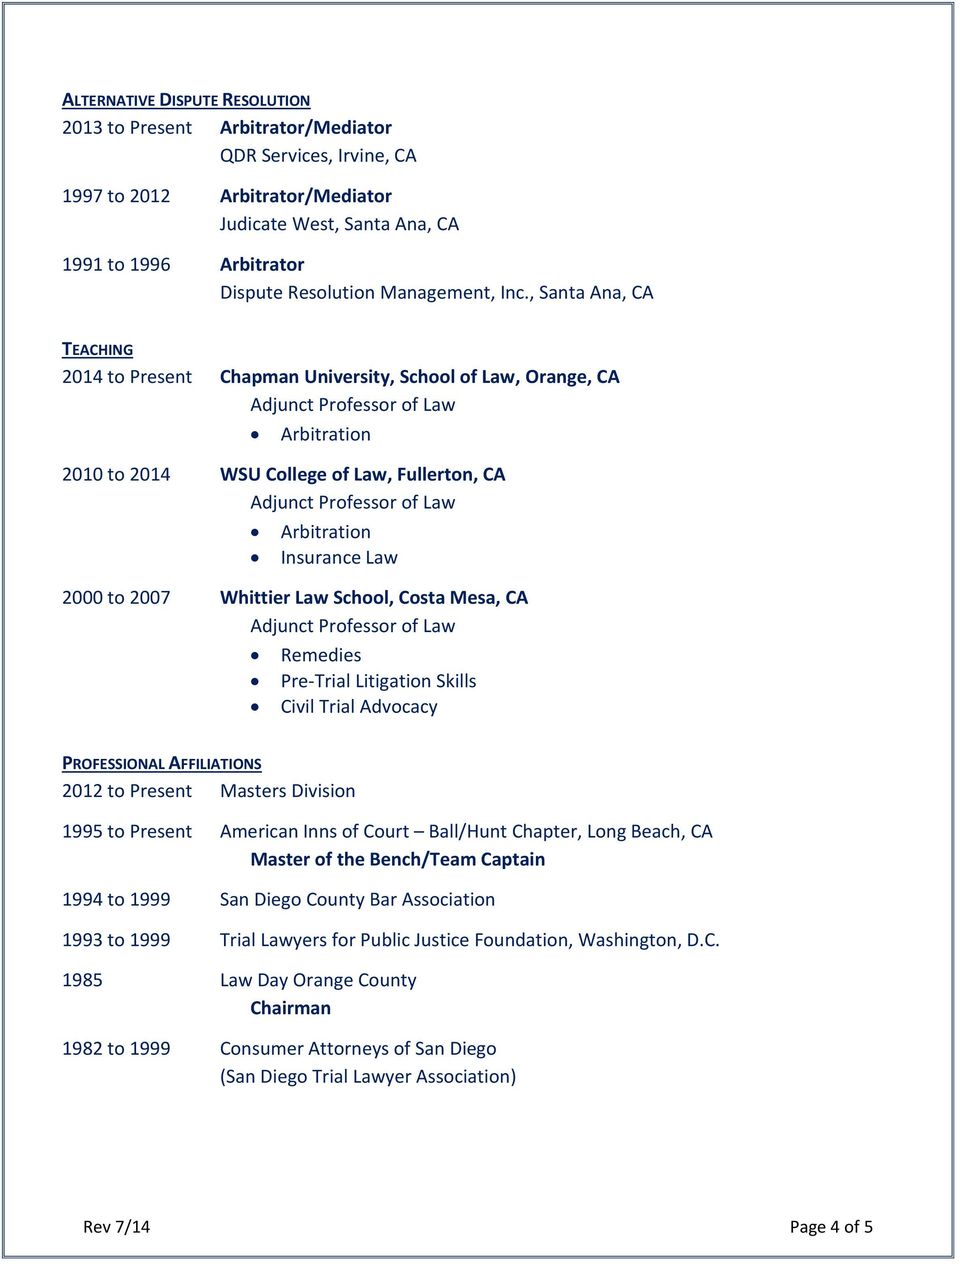 , Santa Ana, CA TEACHING 2014 to Present Chapman University, School of Law, Orange, CA Arbitration 2010 to 2014 WSU College of Law, Fullerton, CA Arbitration Insurance Law 2000 to 2007 Whittier Law